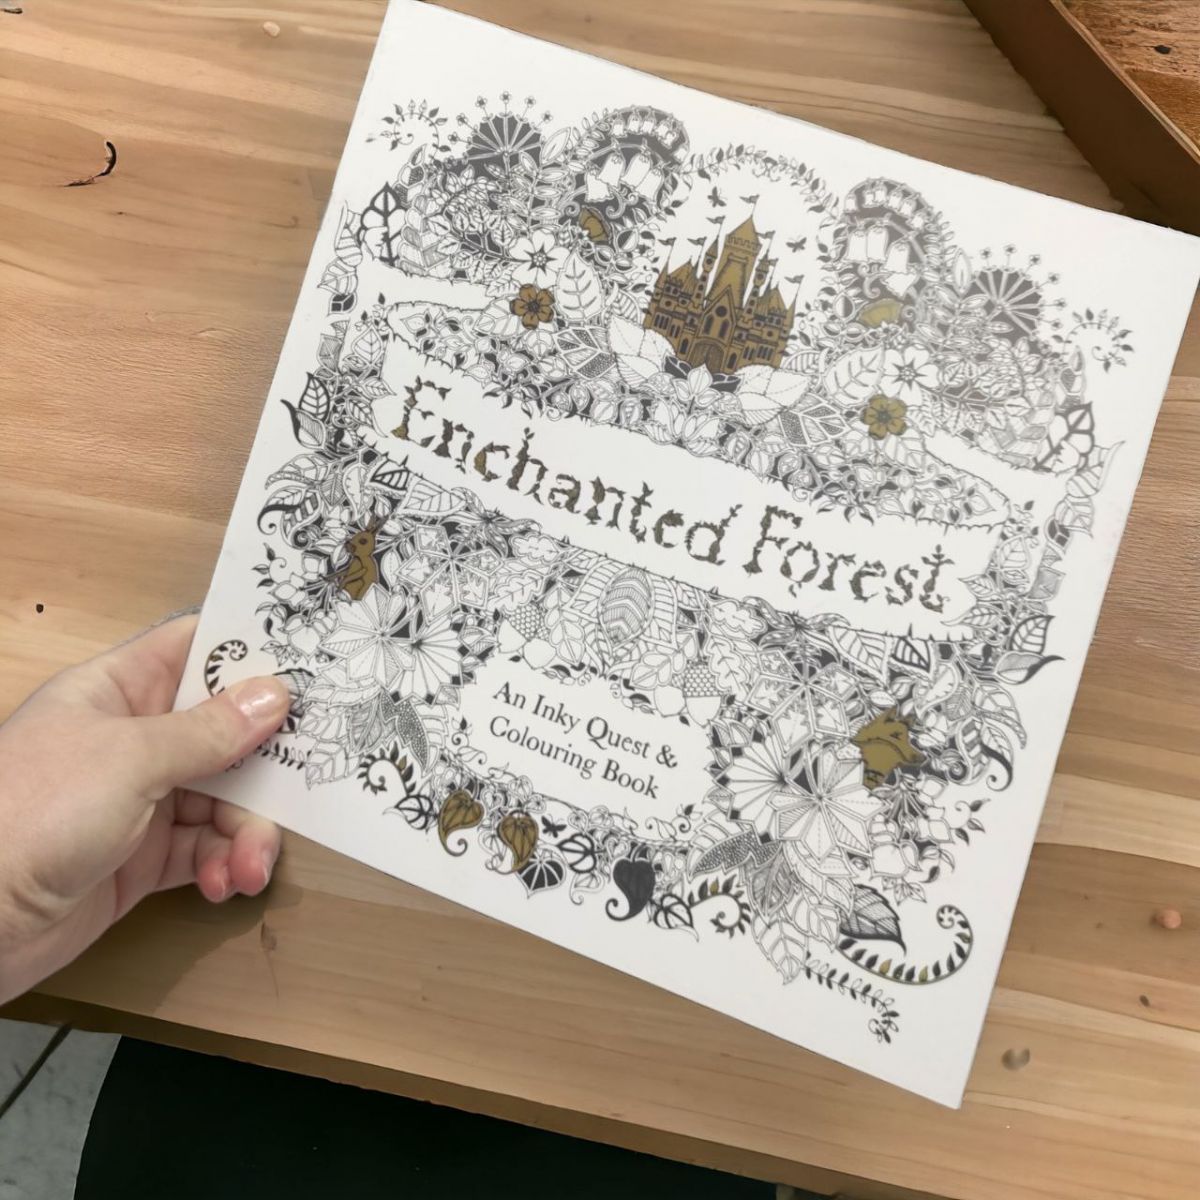 Розмальовка-антистрес "Enchanted Forest"